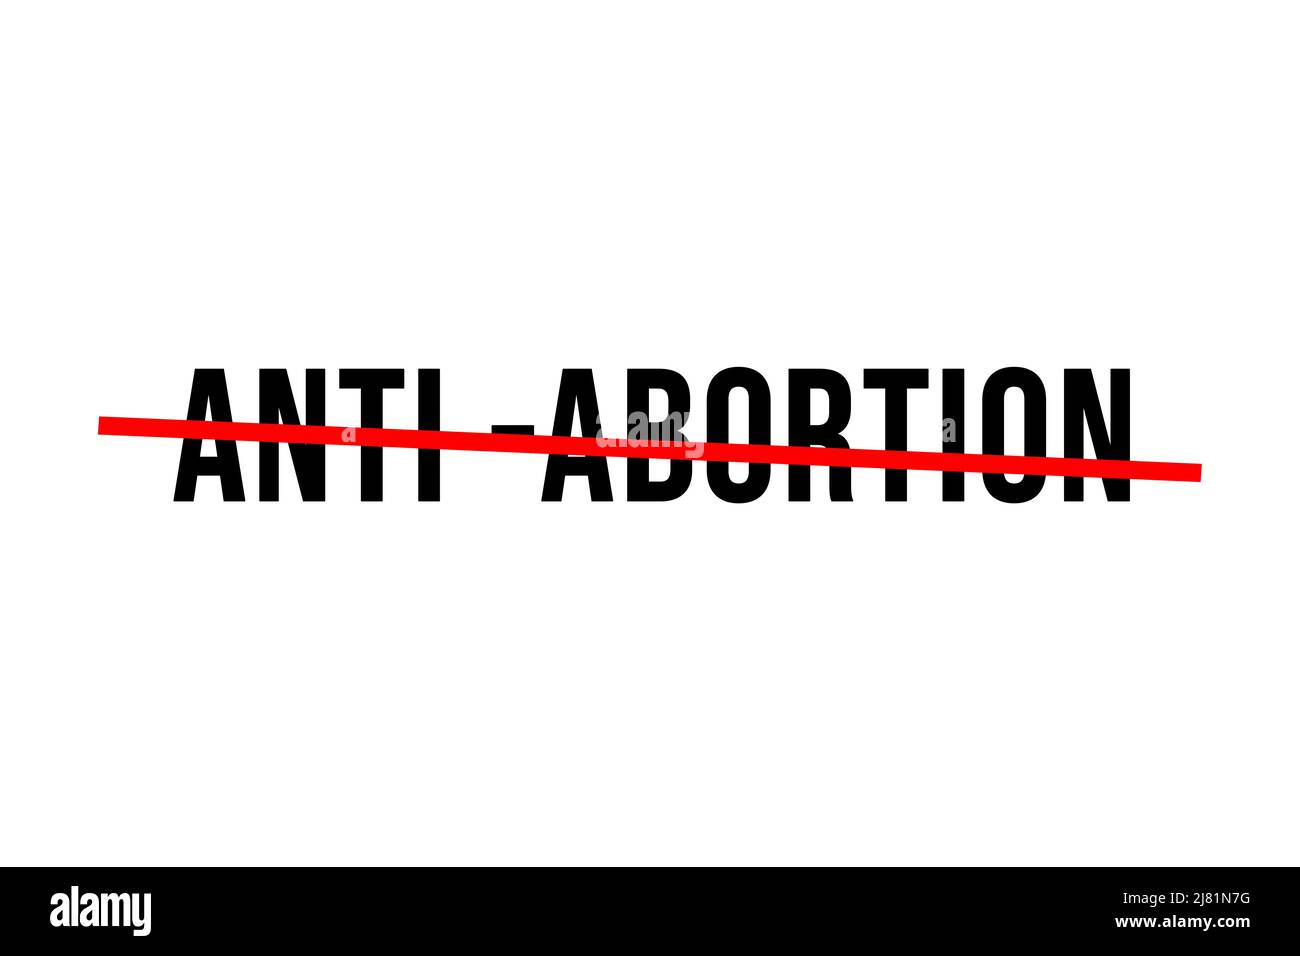 Mantenga legal el aborto. Póster, banner o fondo de Pro Abortion Foto de stock